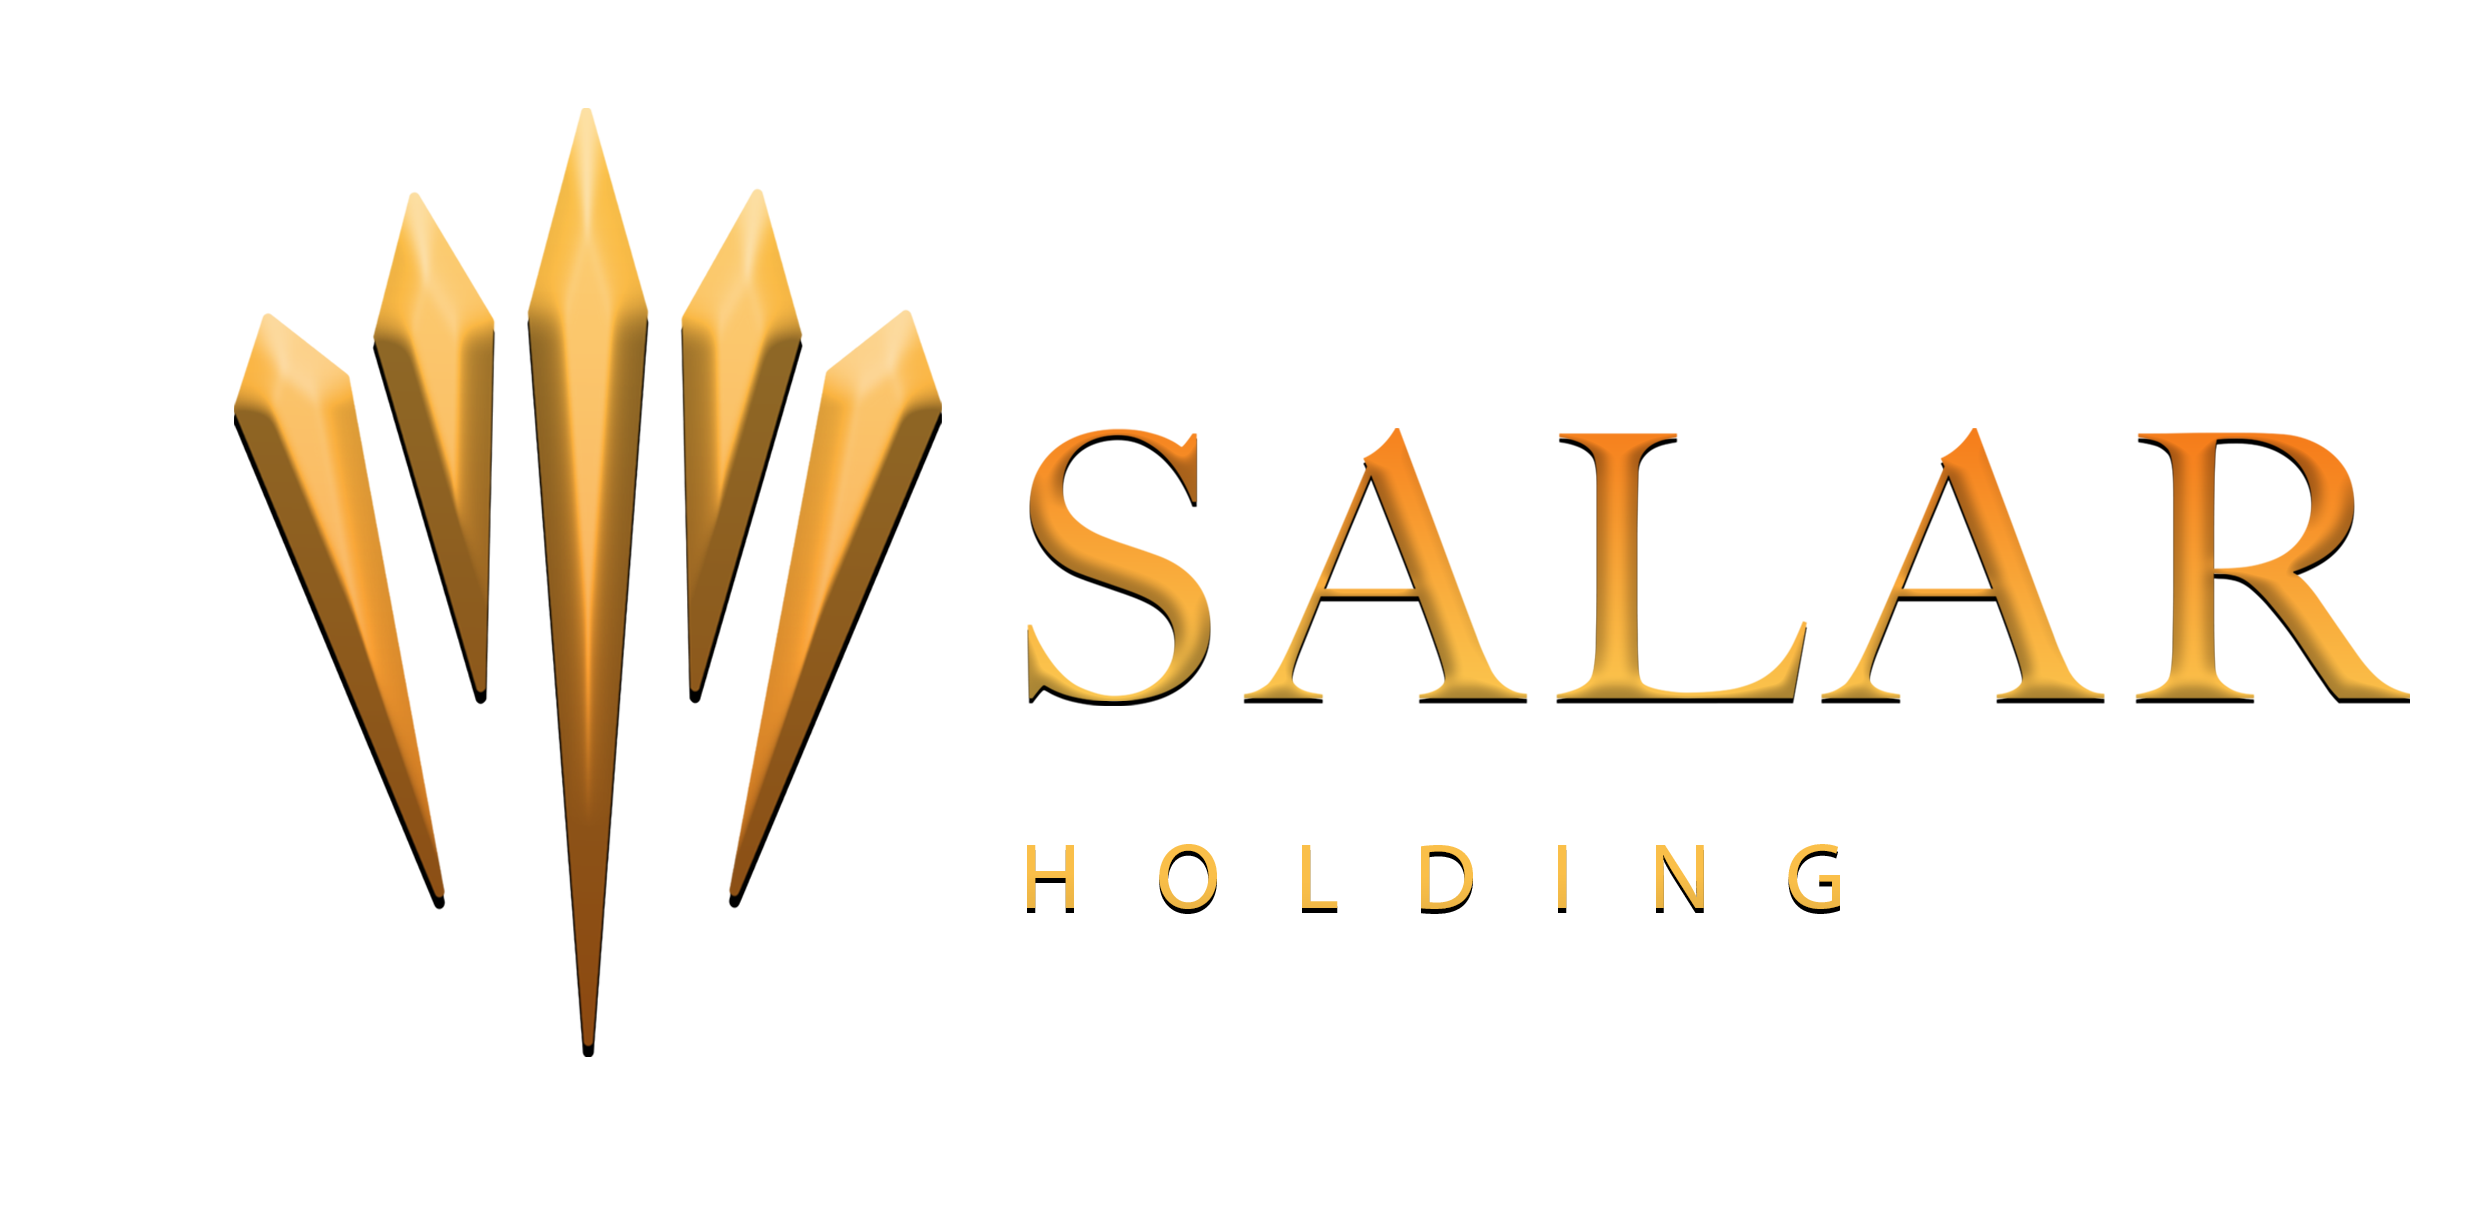 Salar Holding